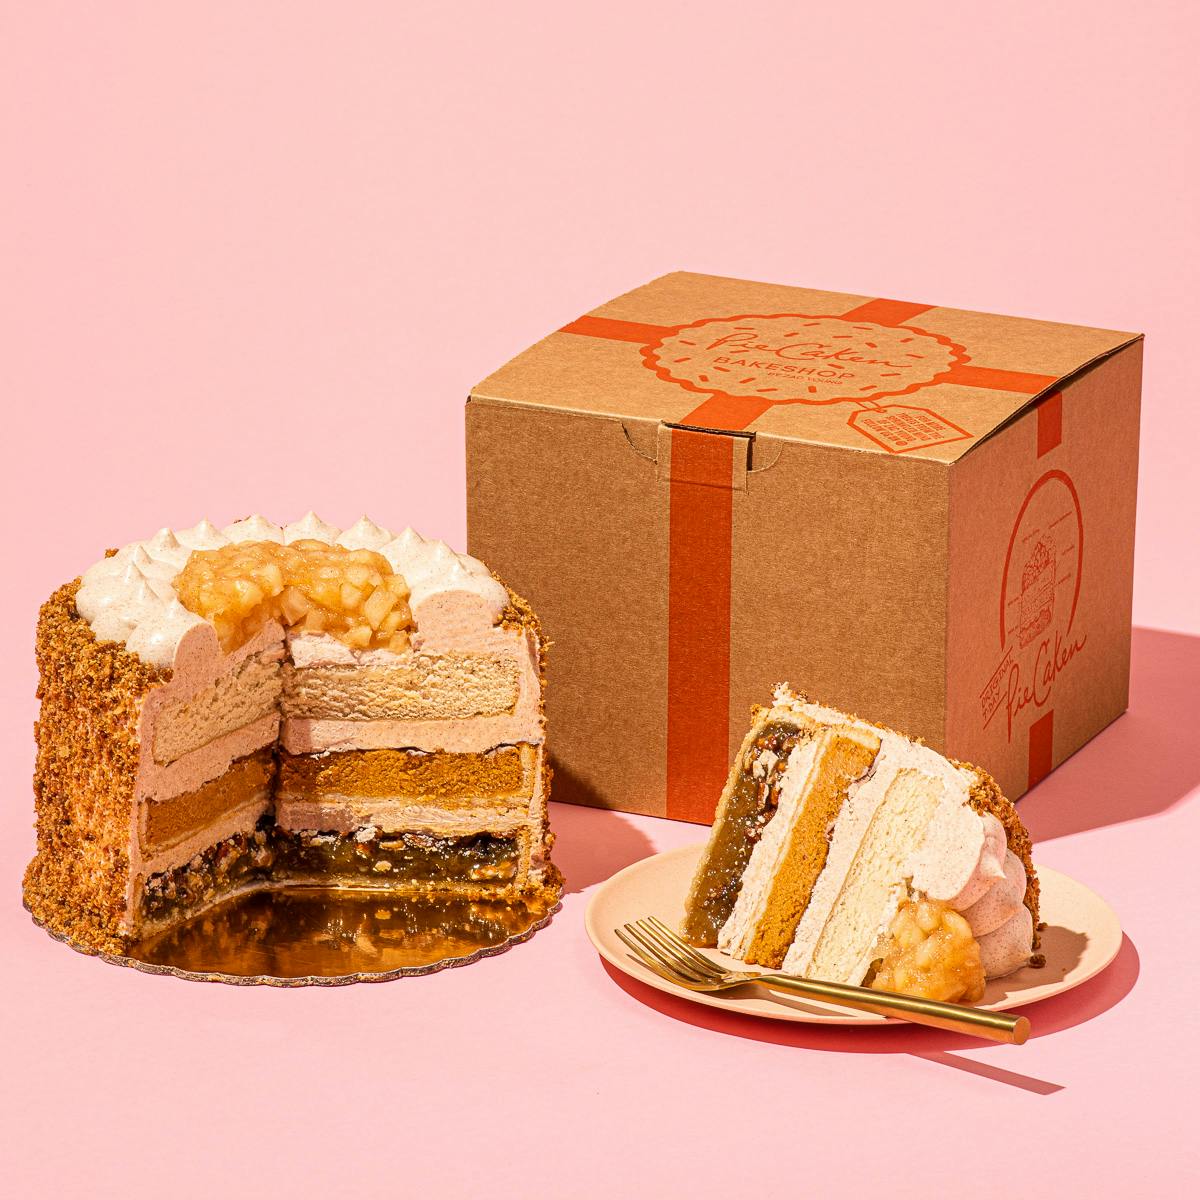 Fondant Cake Gallery - Sugar N Spice Box - We Indulge your taste buds